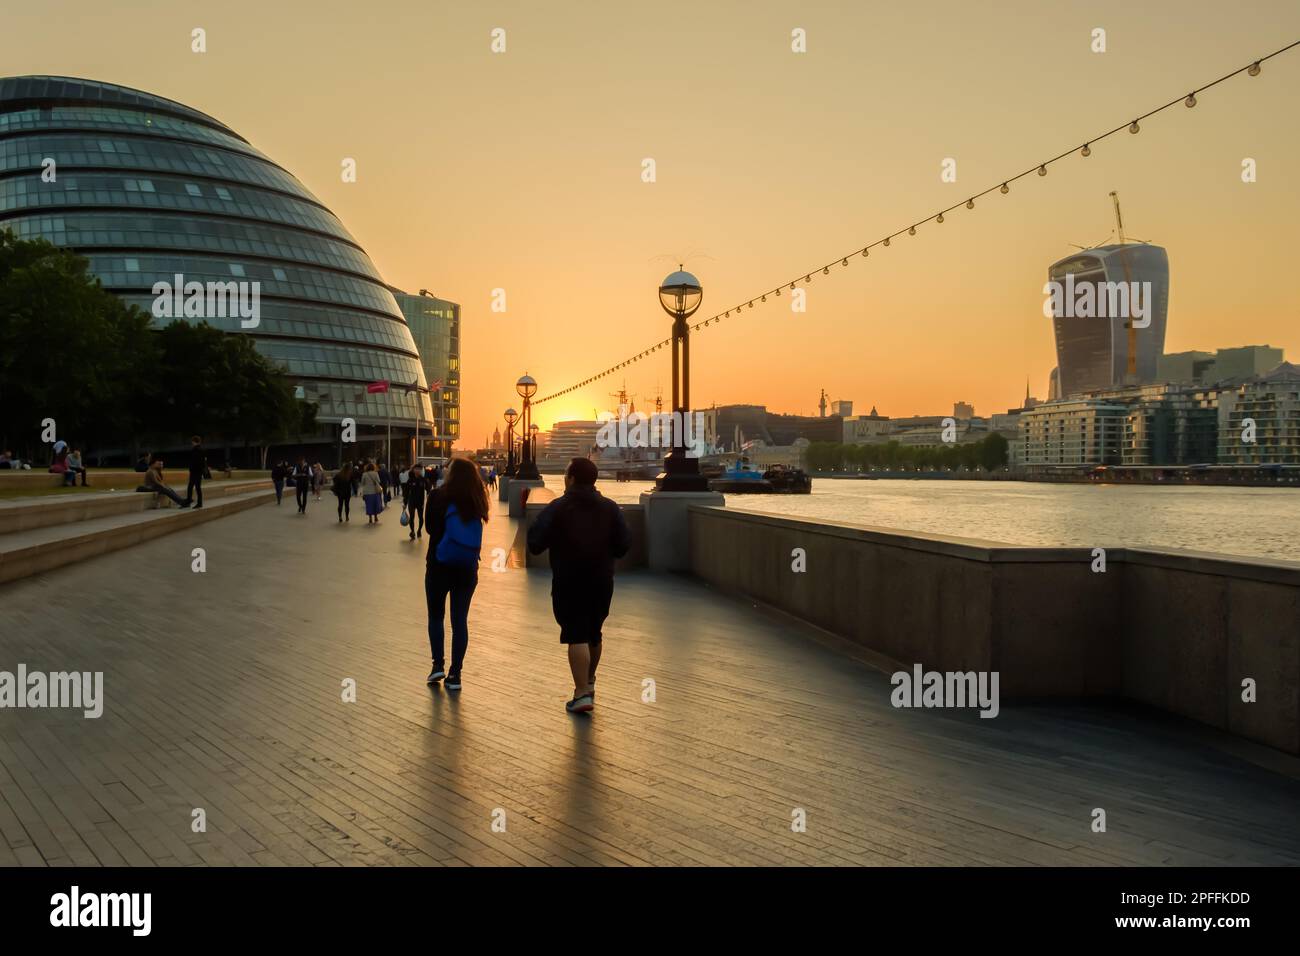 London, United Kingdom - May 23, 2018 : People enjoy the amazing orange sunset next to the river Thames in London Uk Stock Photo